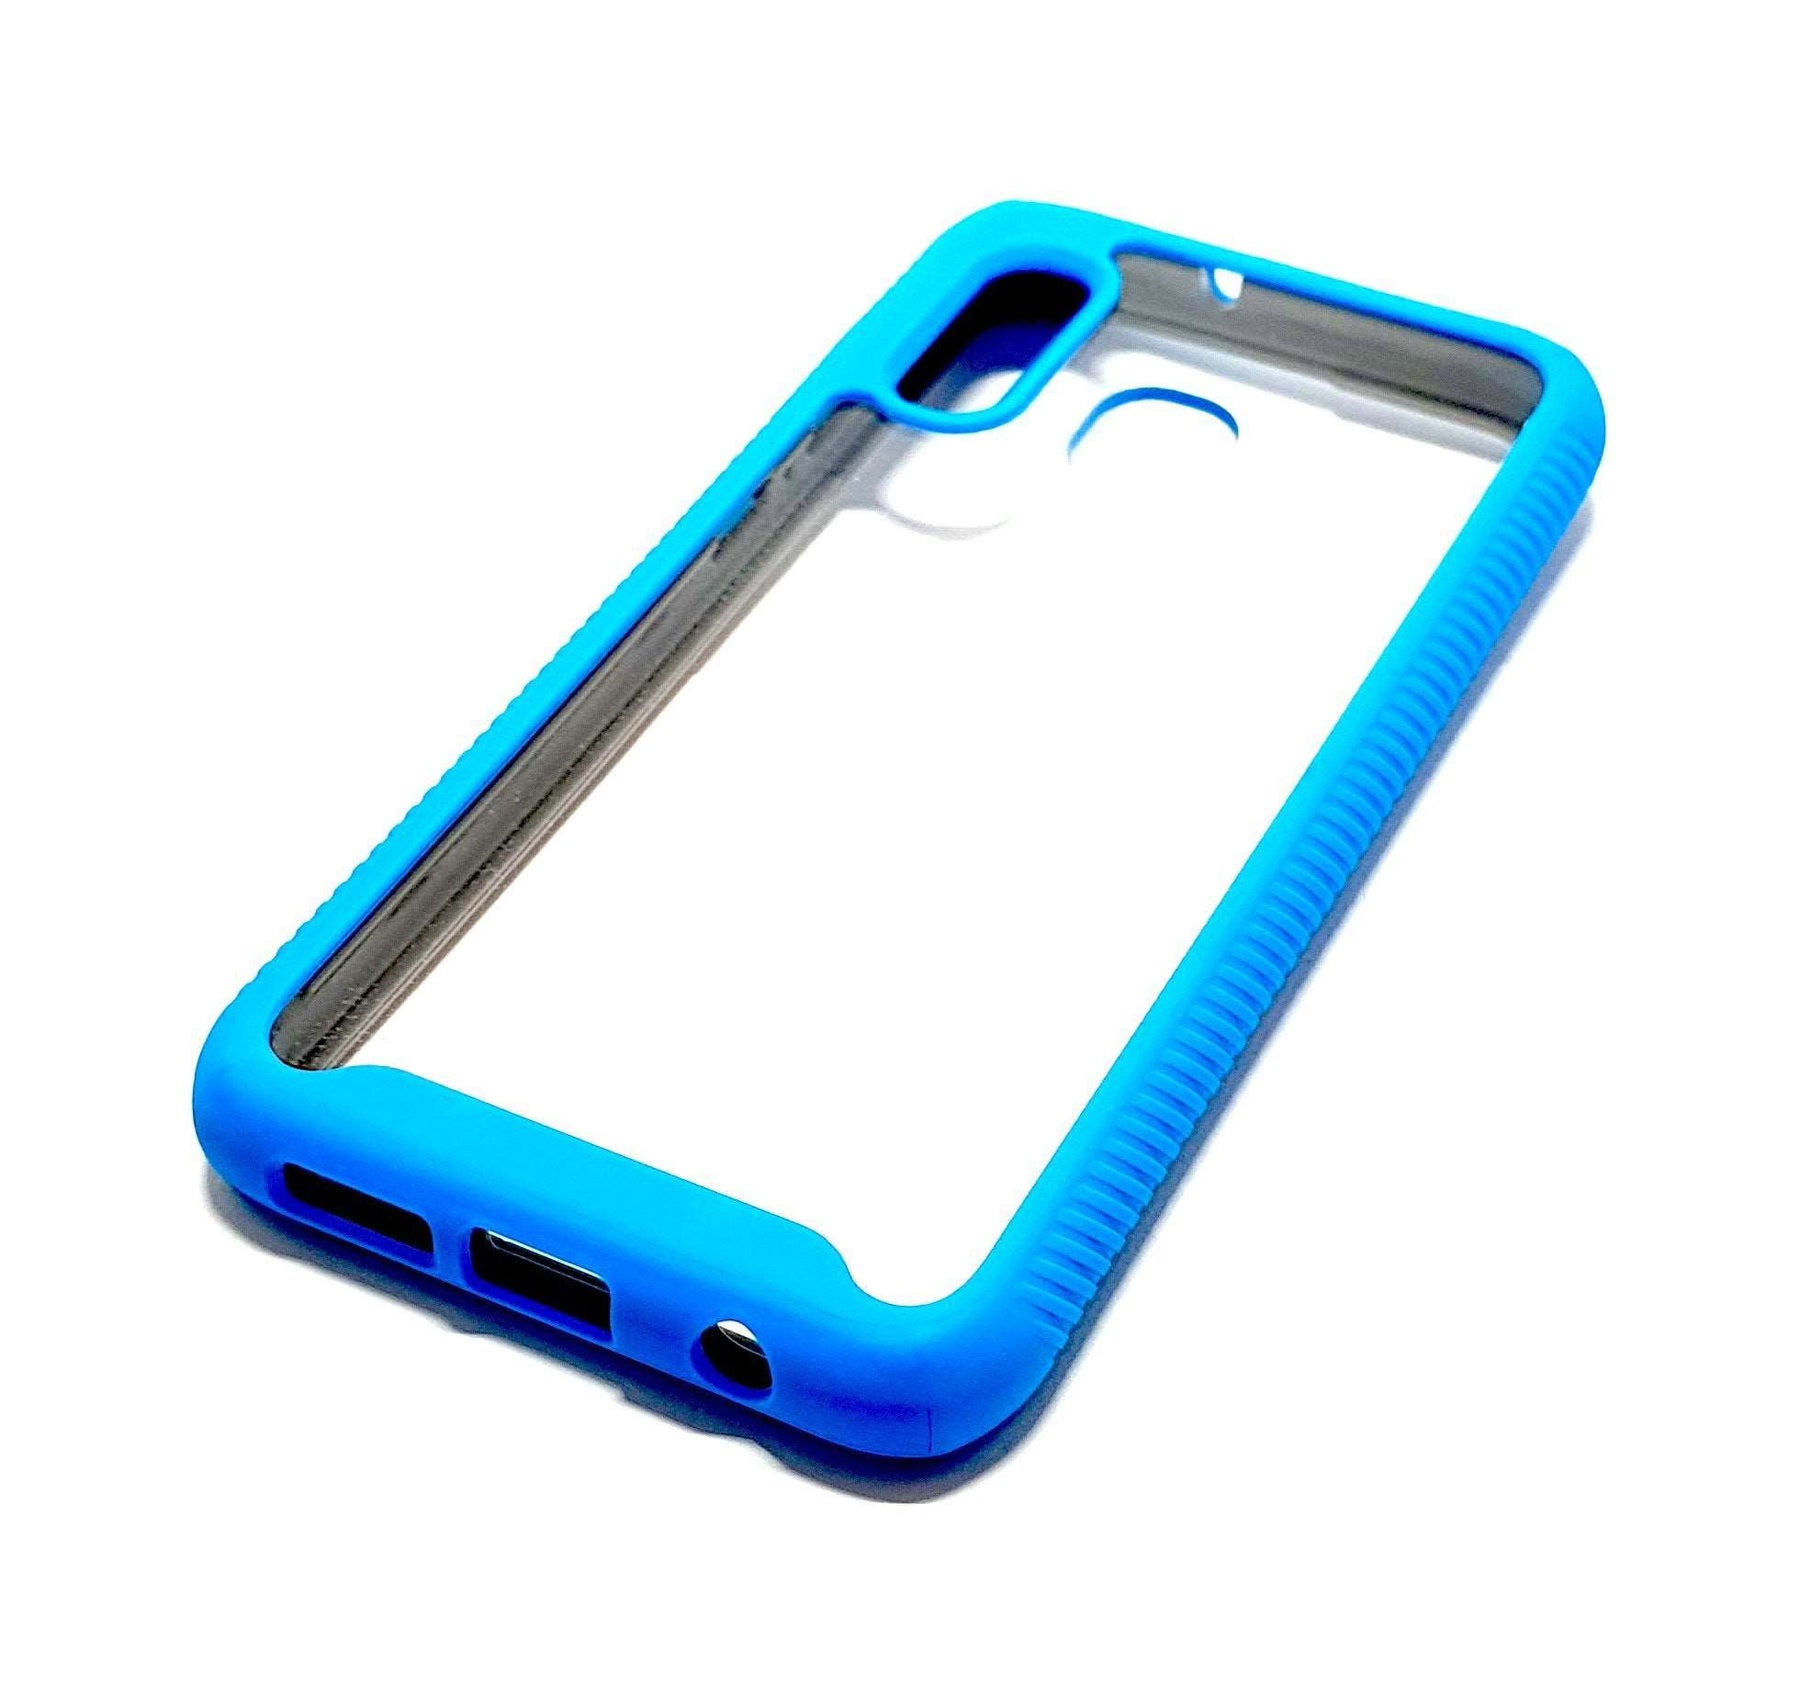 Samsung A20e Shockproof blue clear transparent phone case